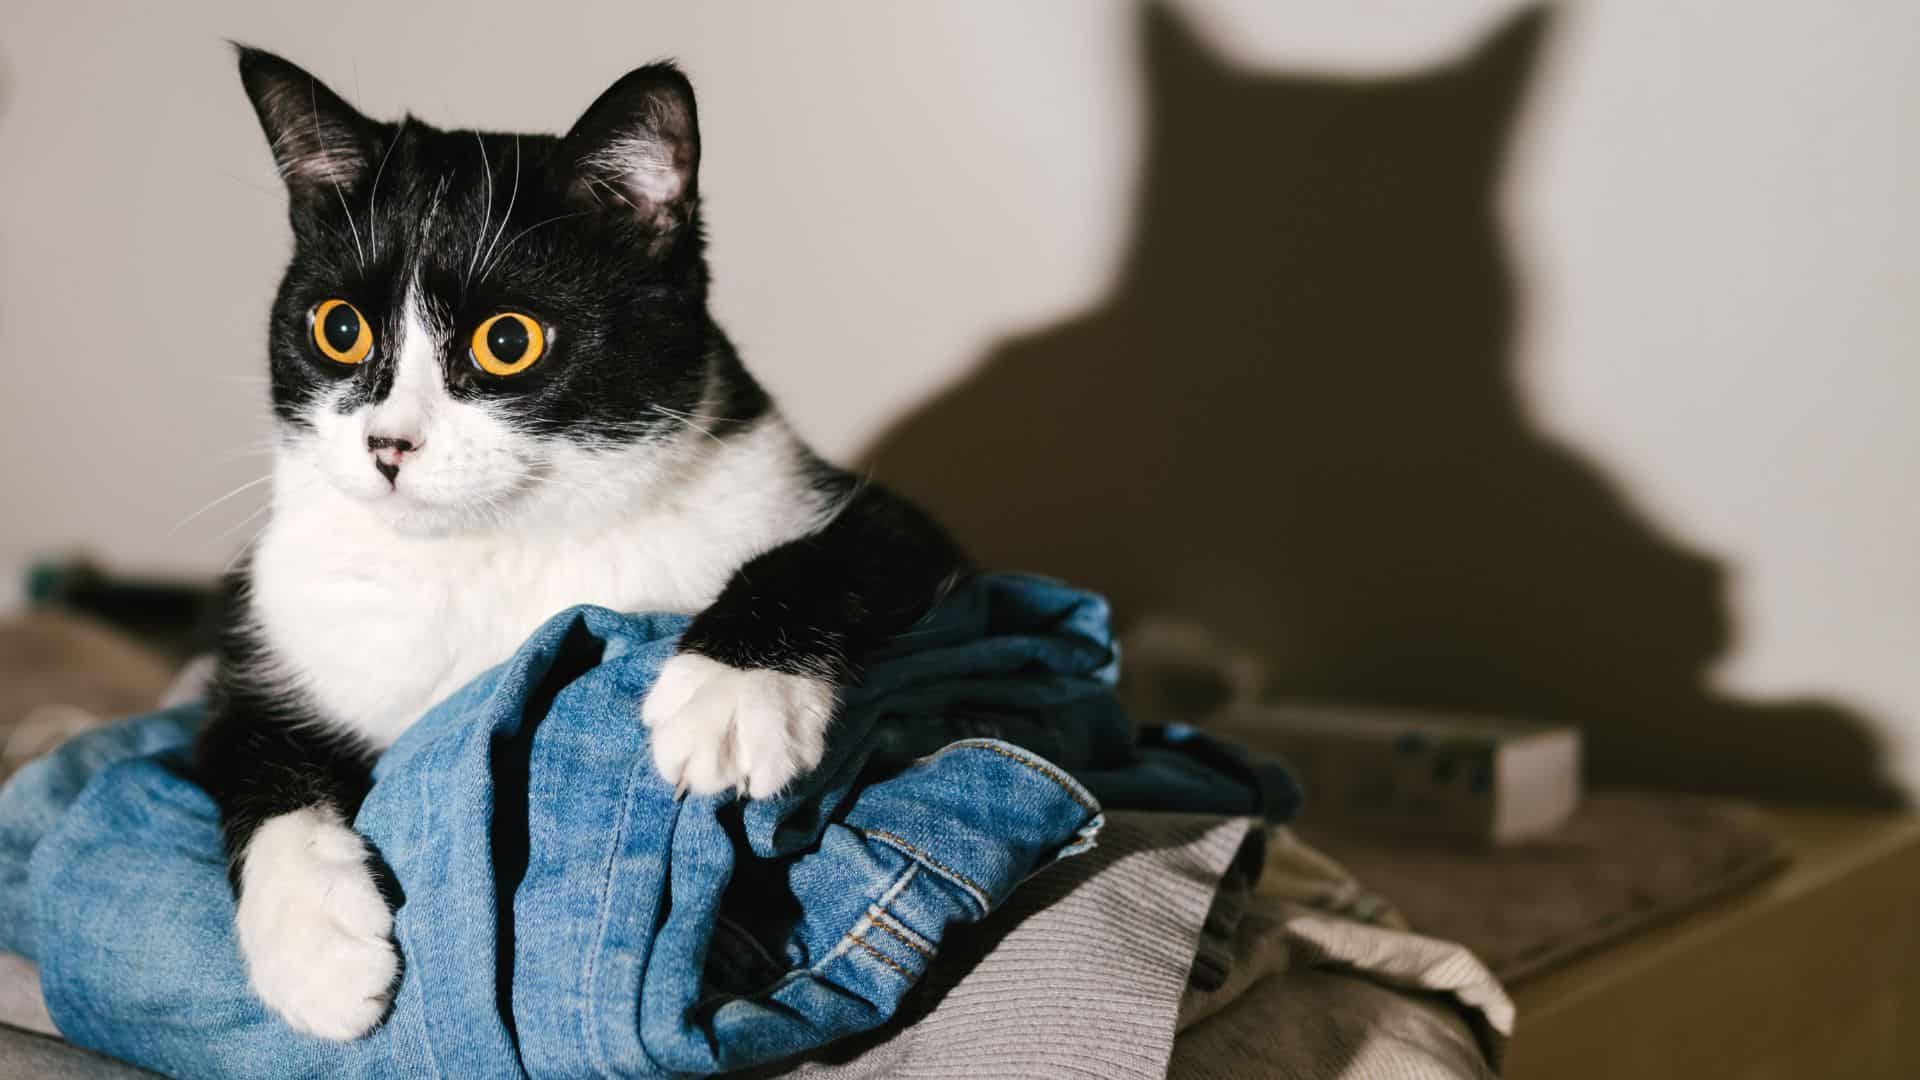 Tuxedo cat posing for camera